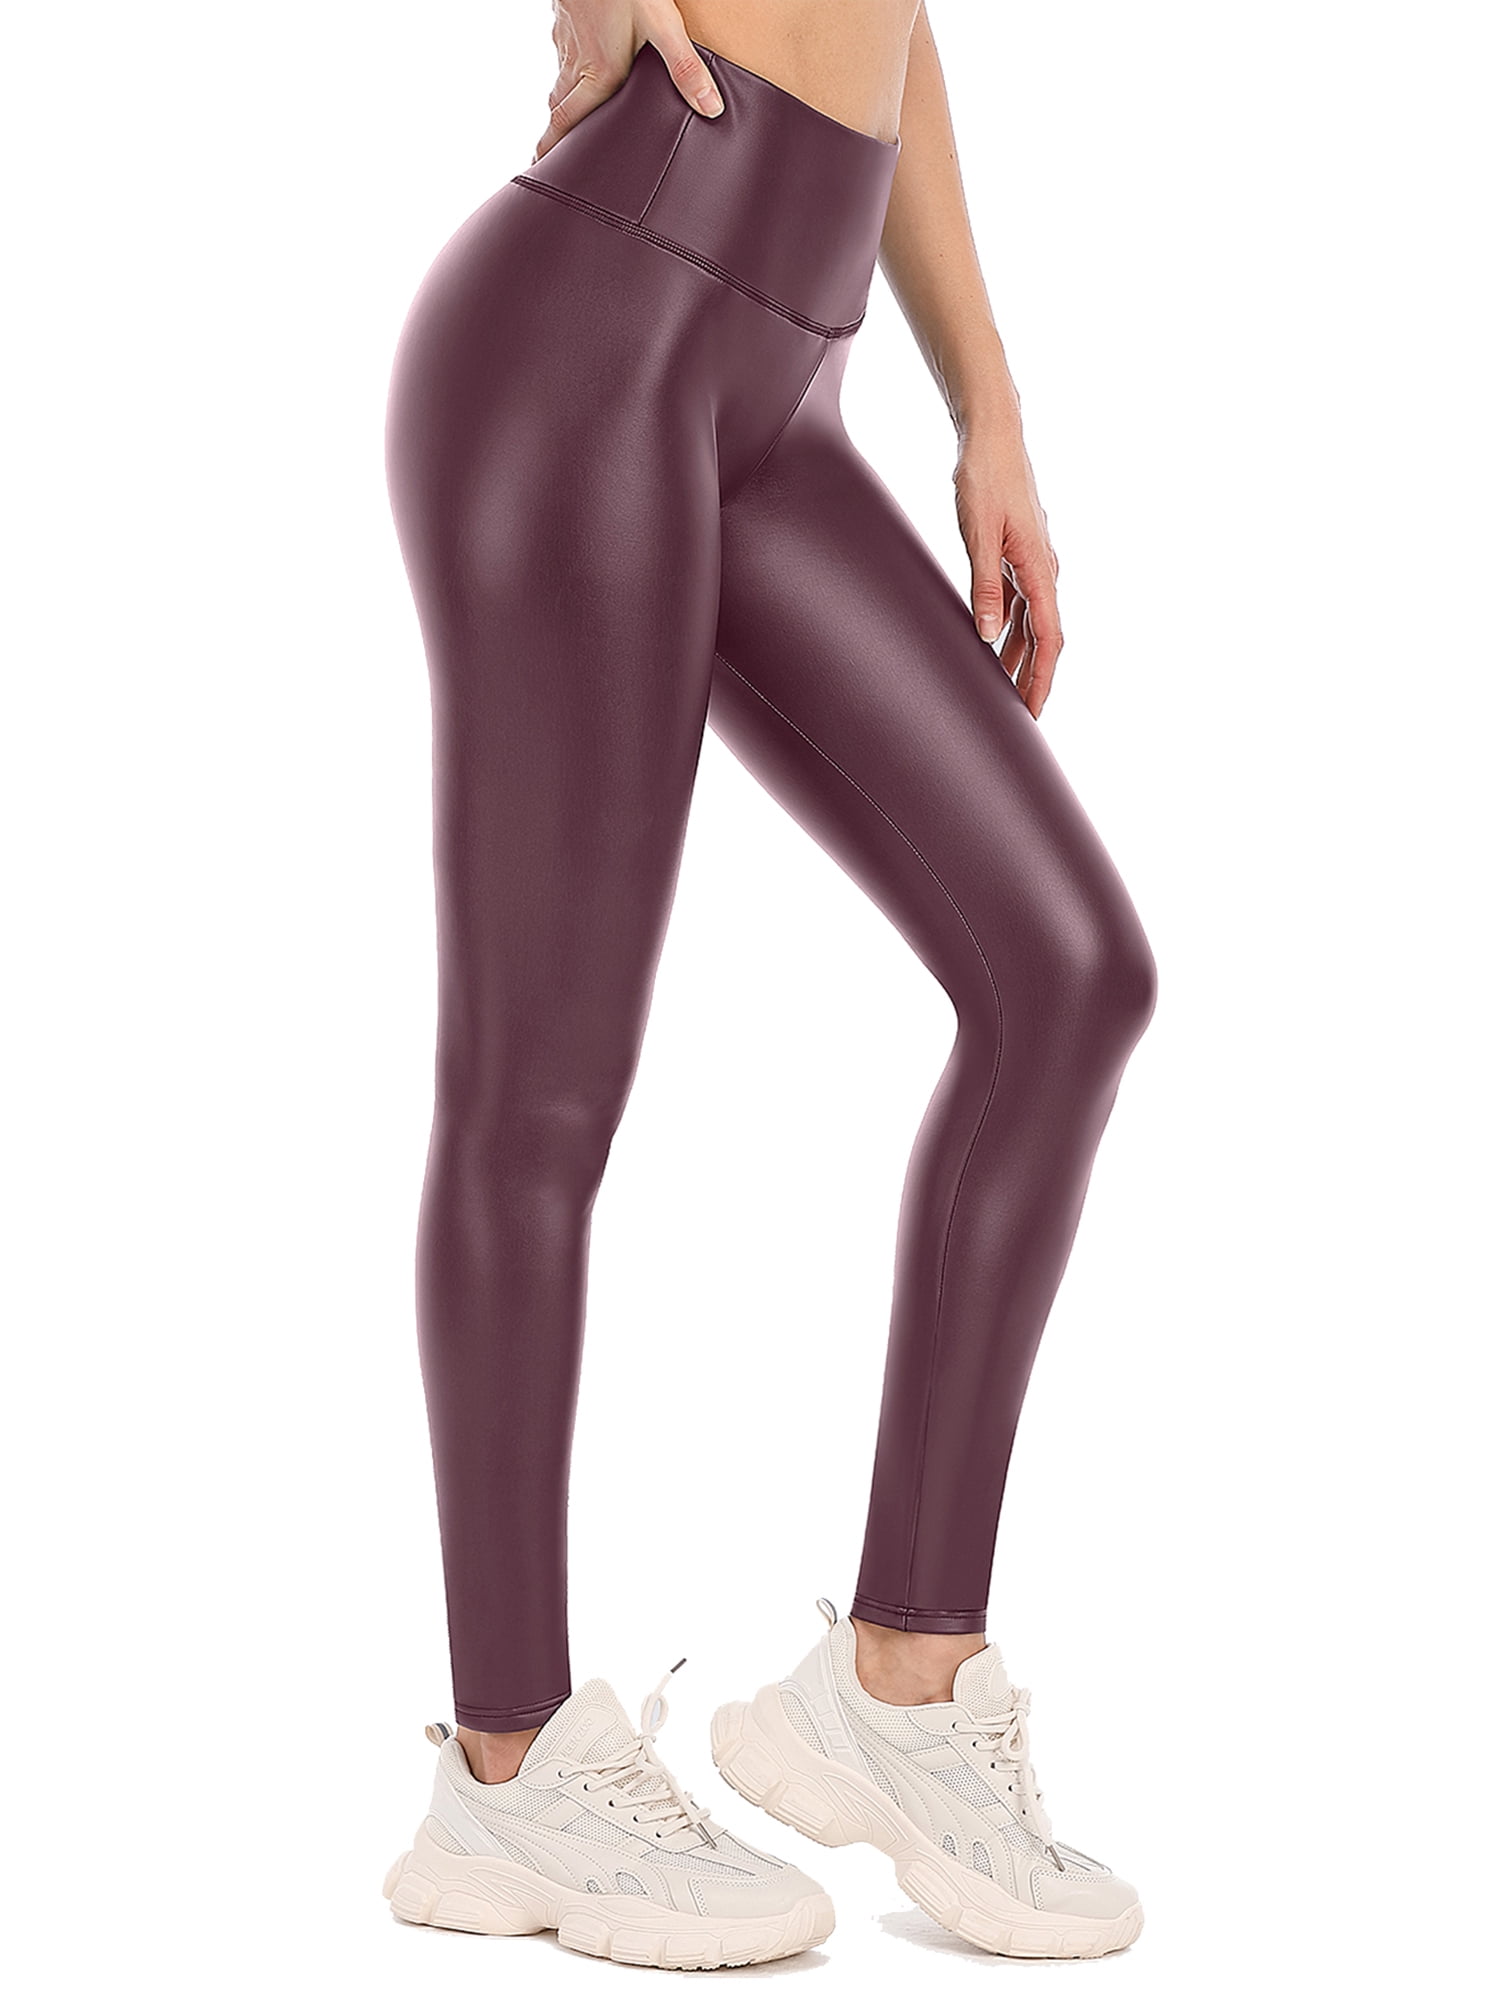 Women's Faux Leather Thermal Leggings Fleece Lined Warm Yoga Pants